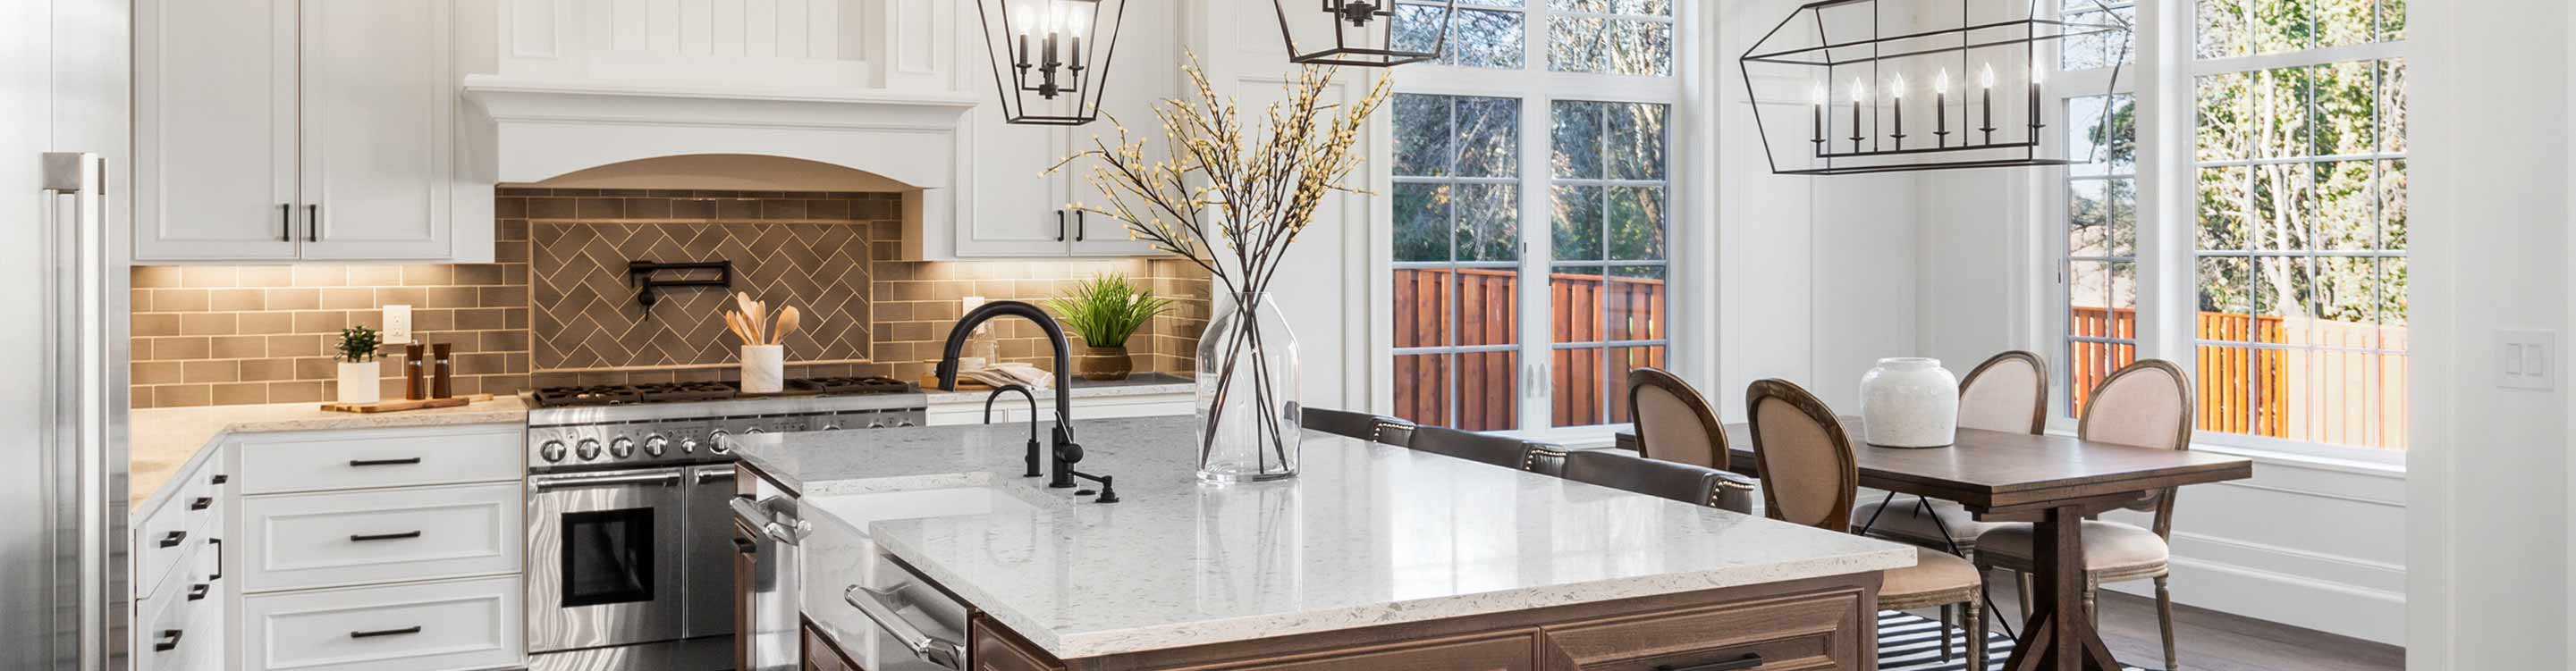 Kitchen with large island, white cabinetry and tile backsplash